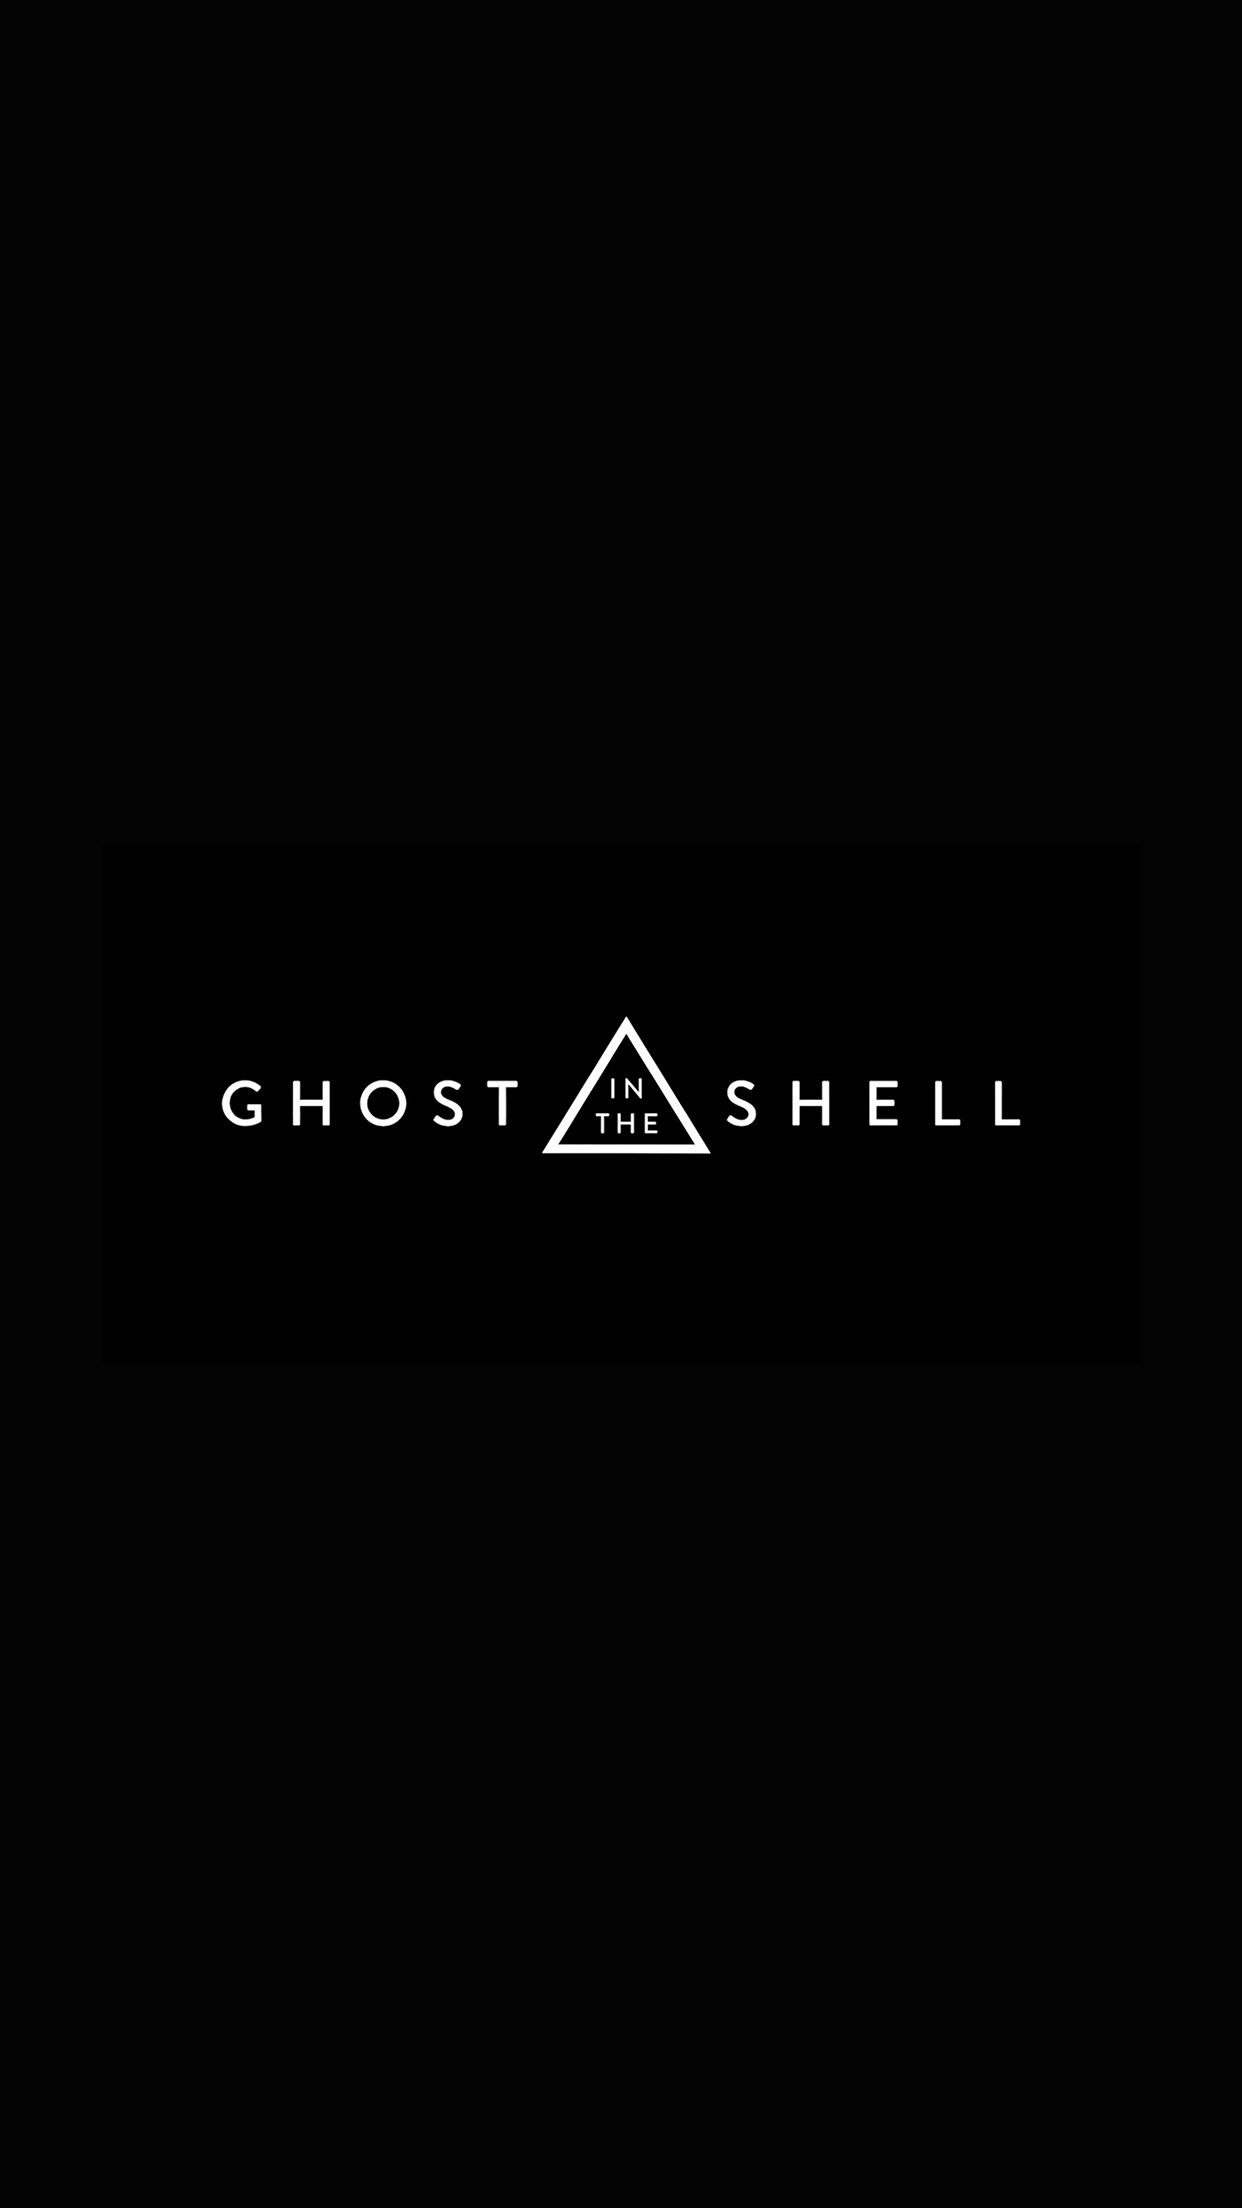 Ghost In The Shell Dark Logo Film Illustration Art Wallpaper